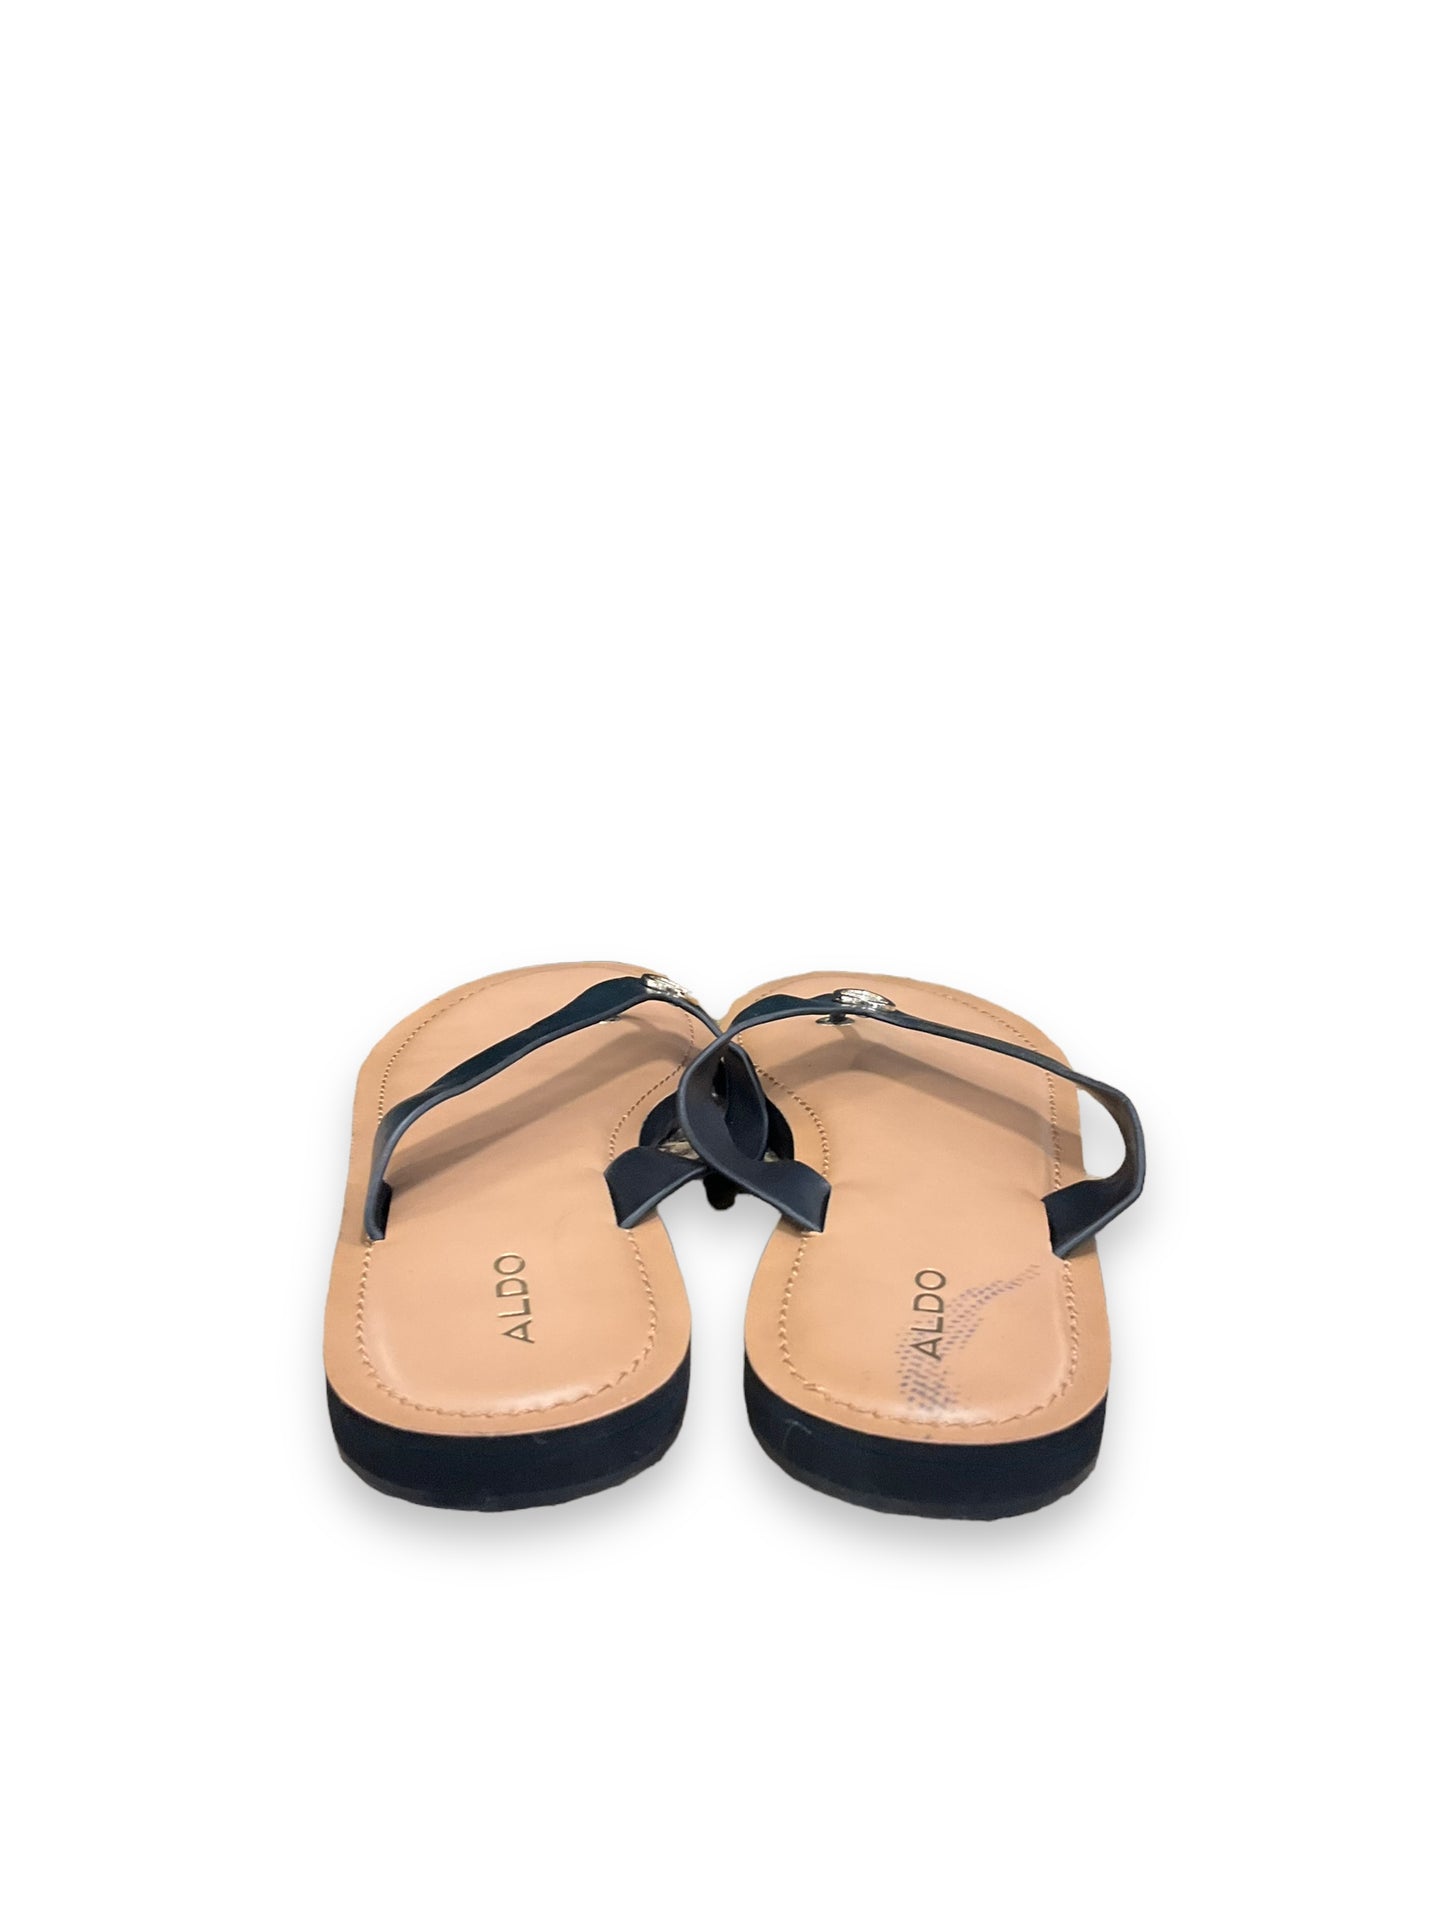 Sandals Flip Flops By Aldo  Size: 10